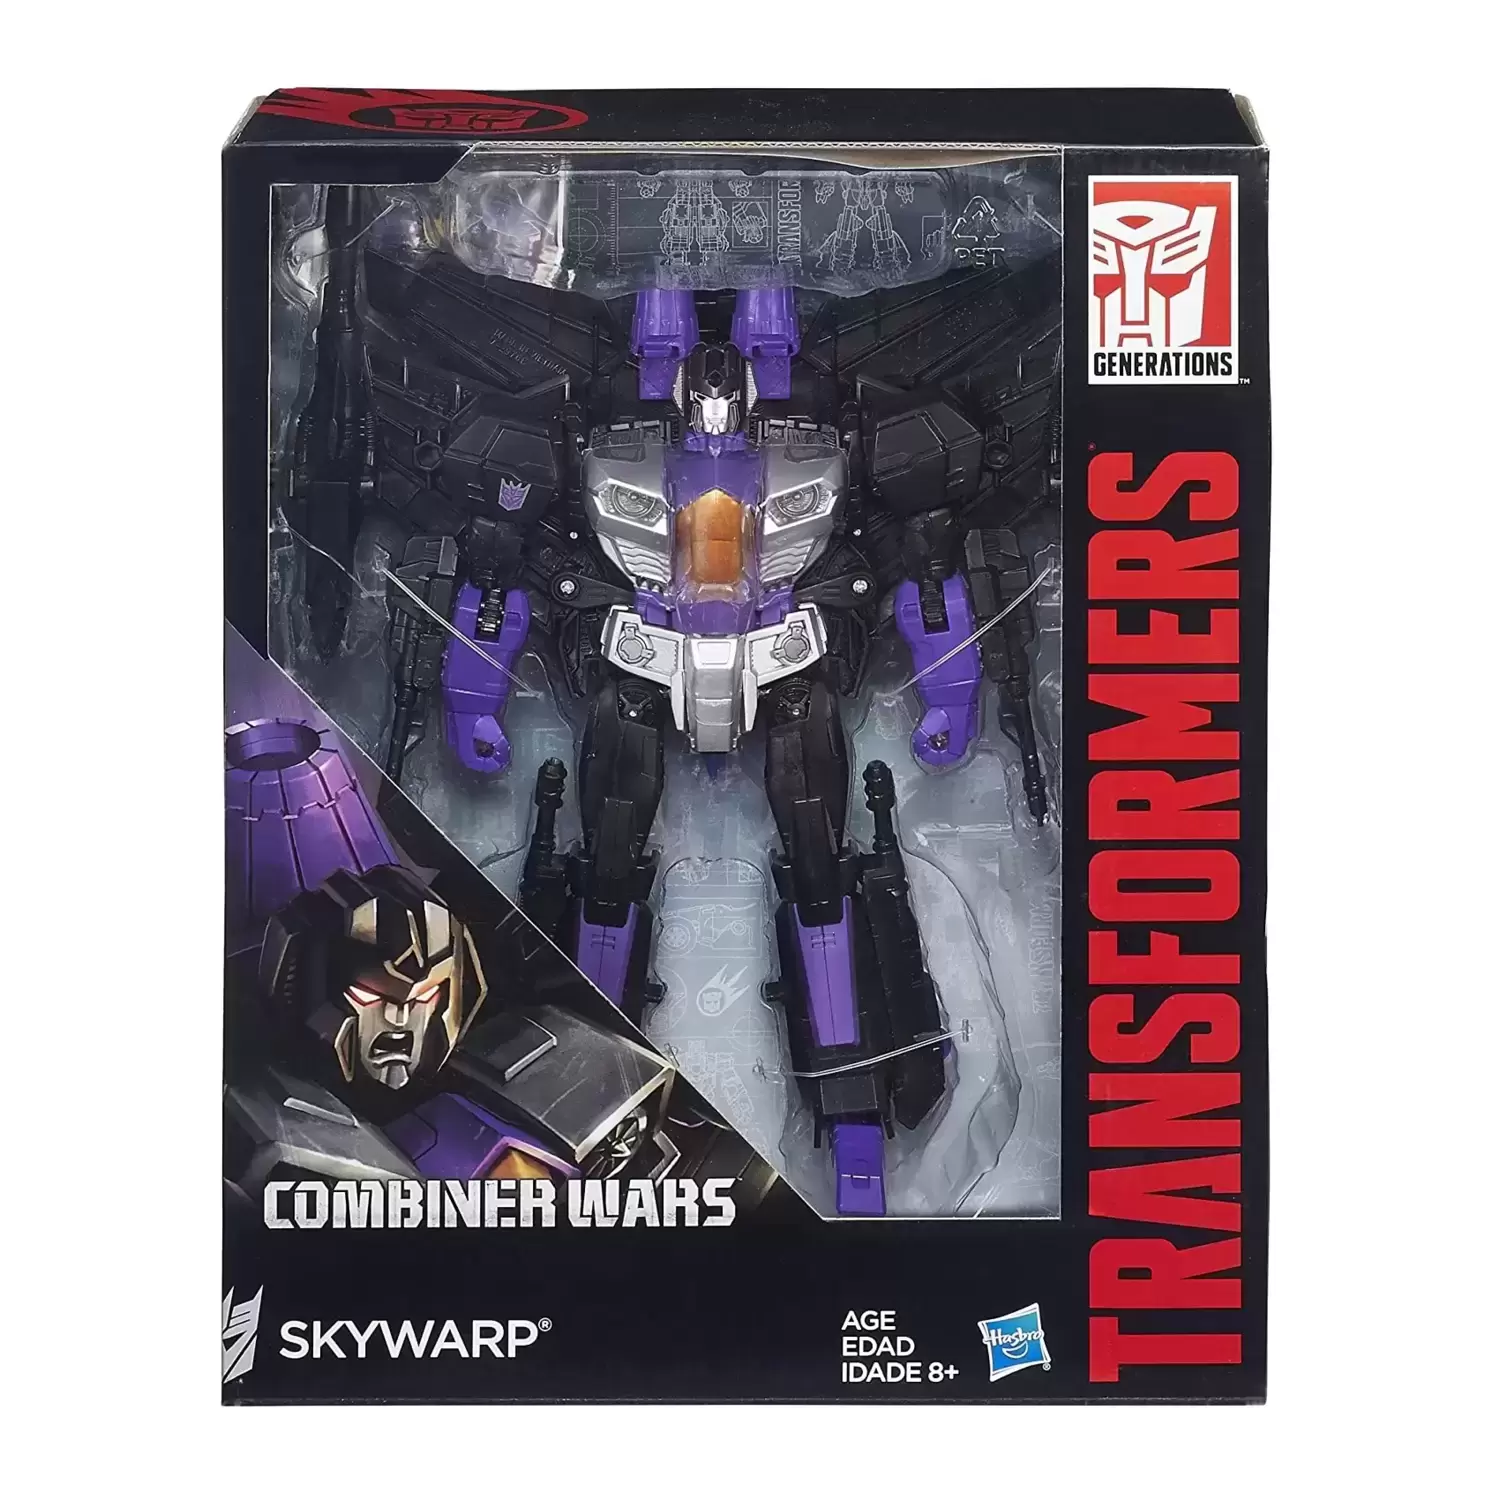 Transformers Prime Wars Trilogy: Combiner Wars - Skywarp